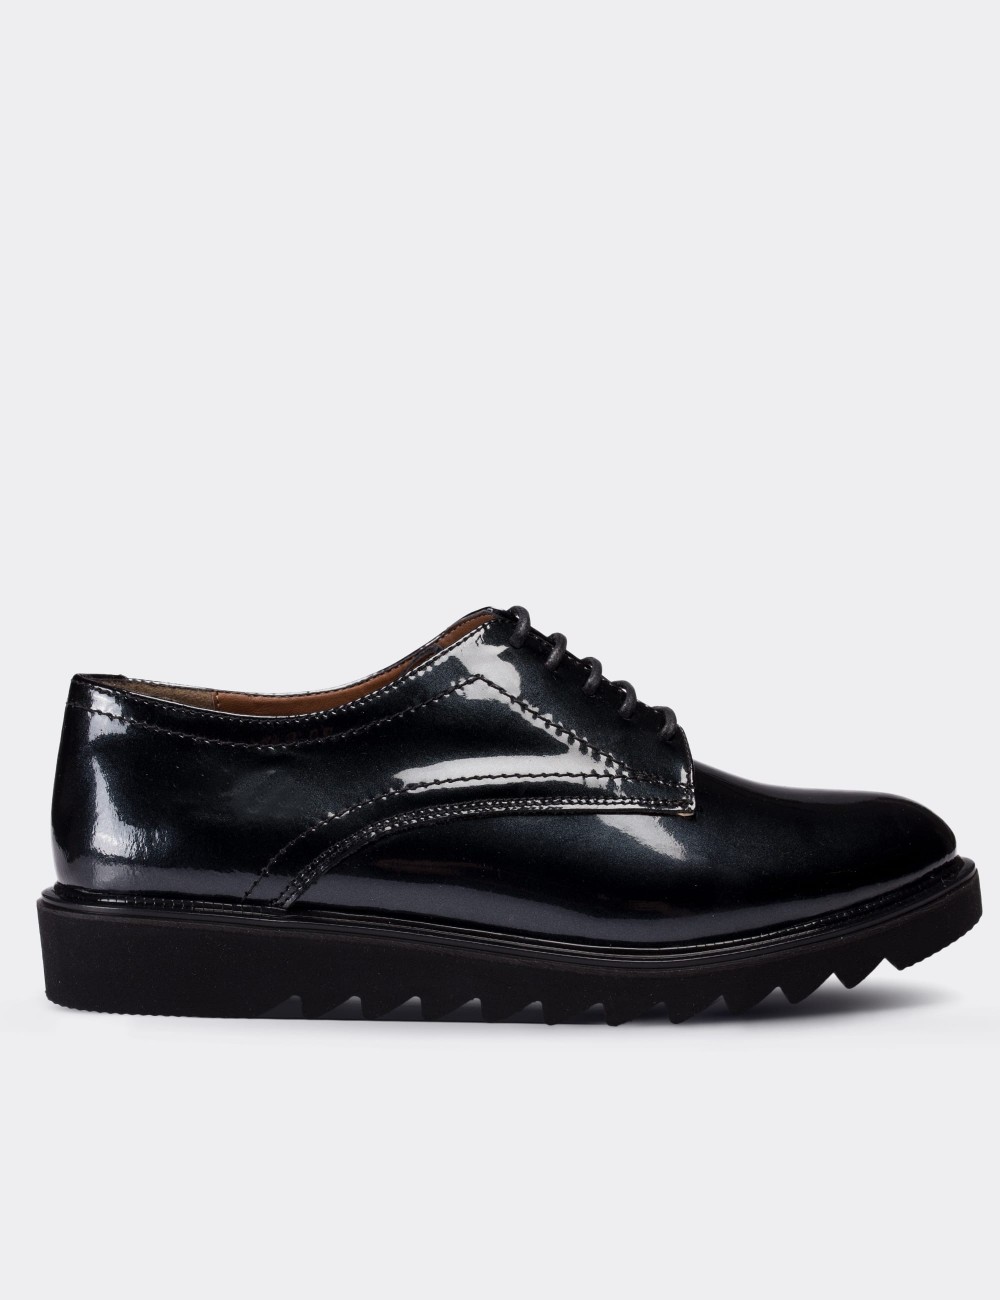 Black Patent Leather Lace-up Oxford Shoes - 01430ZSYHE09